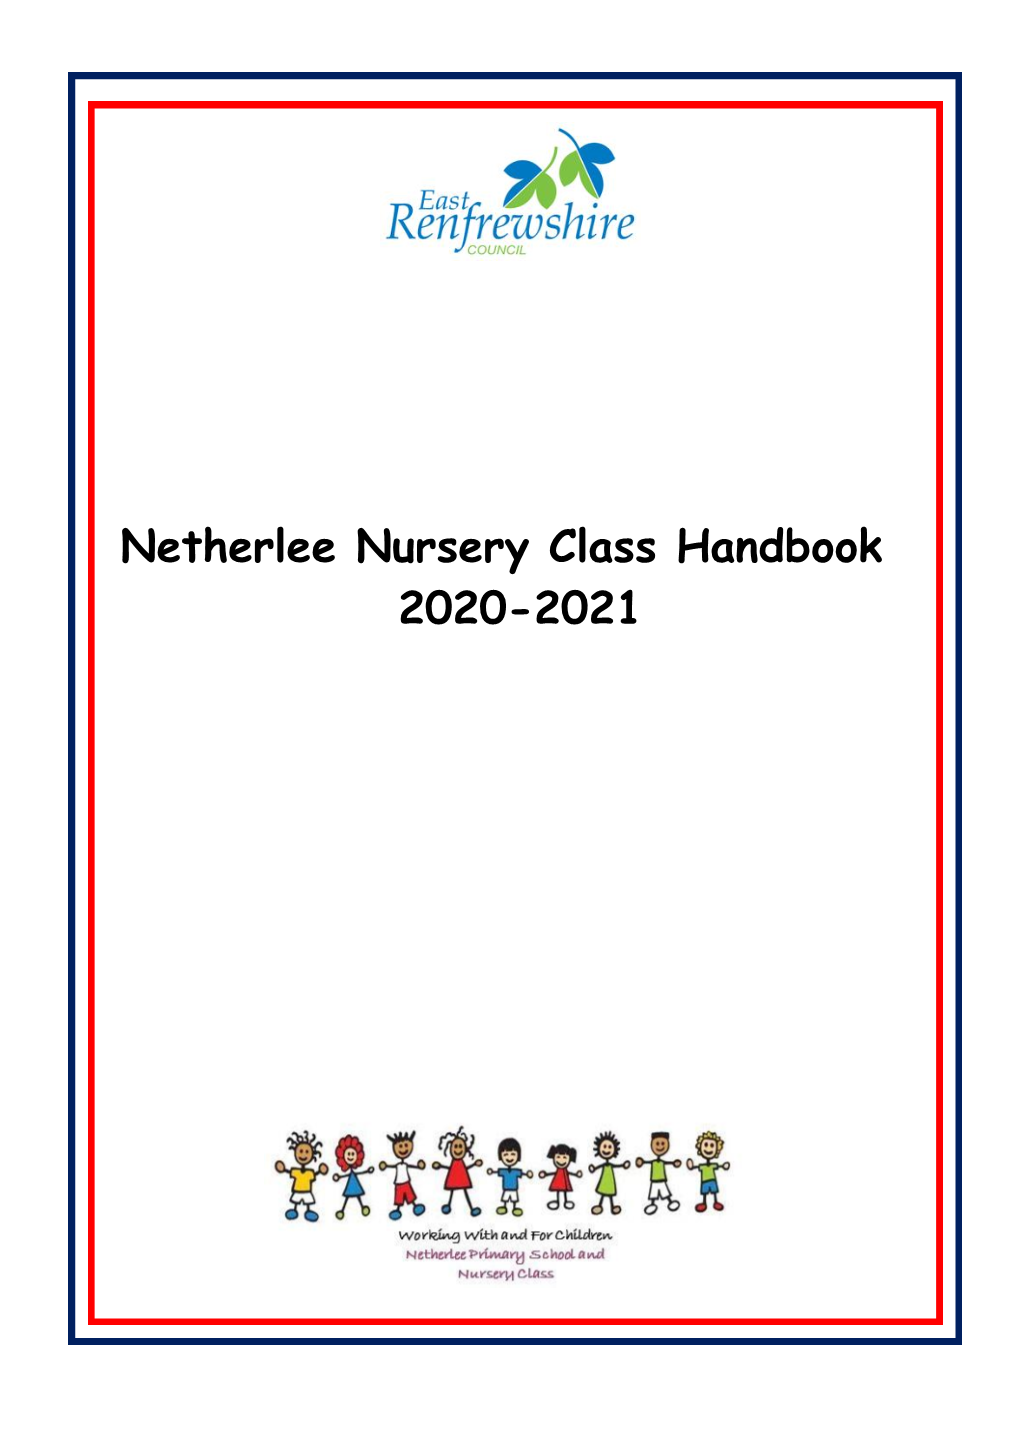 Netherlee Nursery Class Handbook 2020-2021